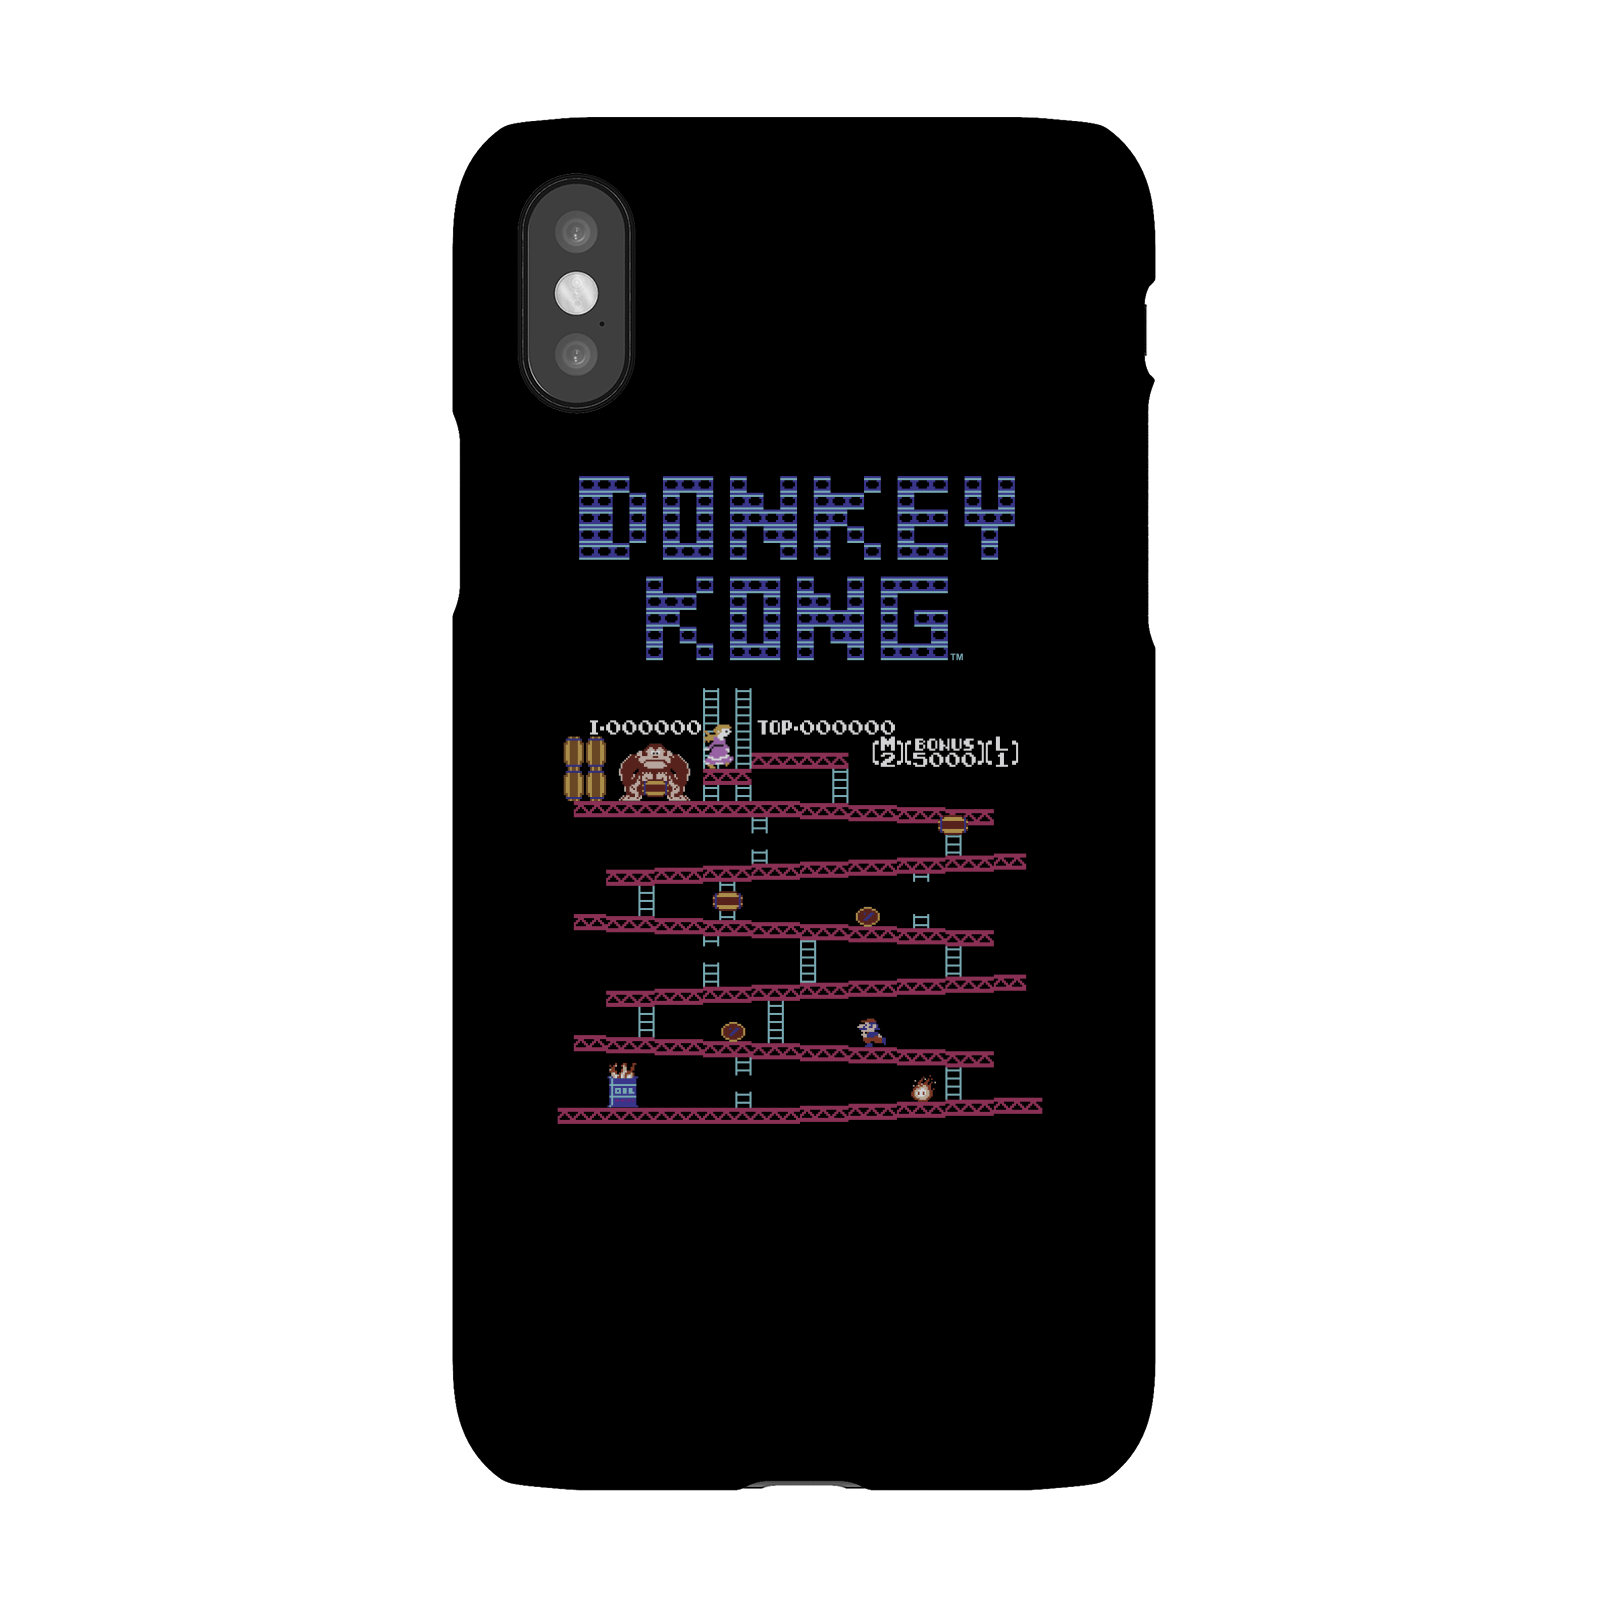 Nintendo Donkey Kong Retro Phone Case - iPhone X - Snap Case - Gloss